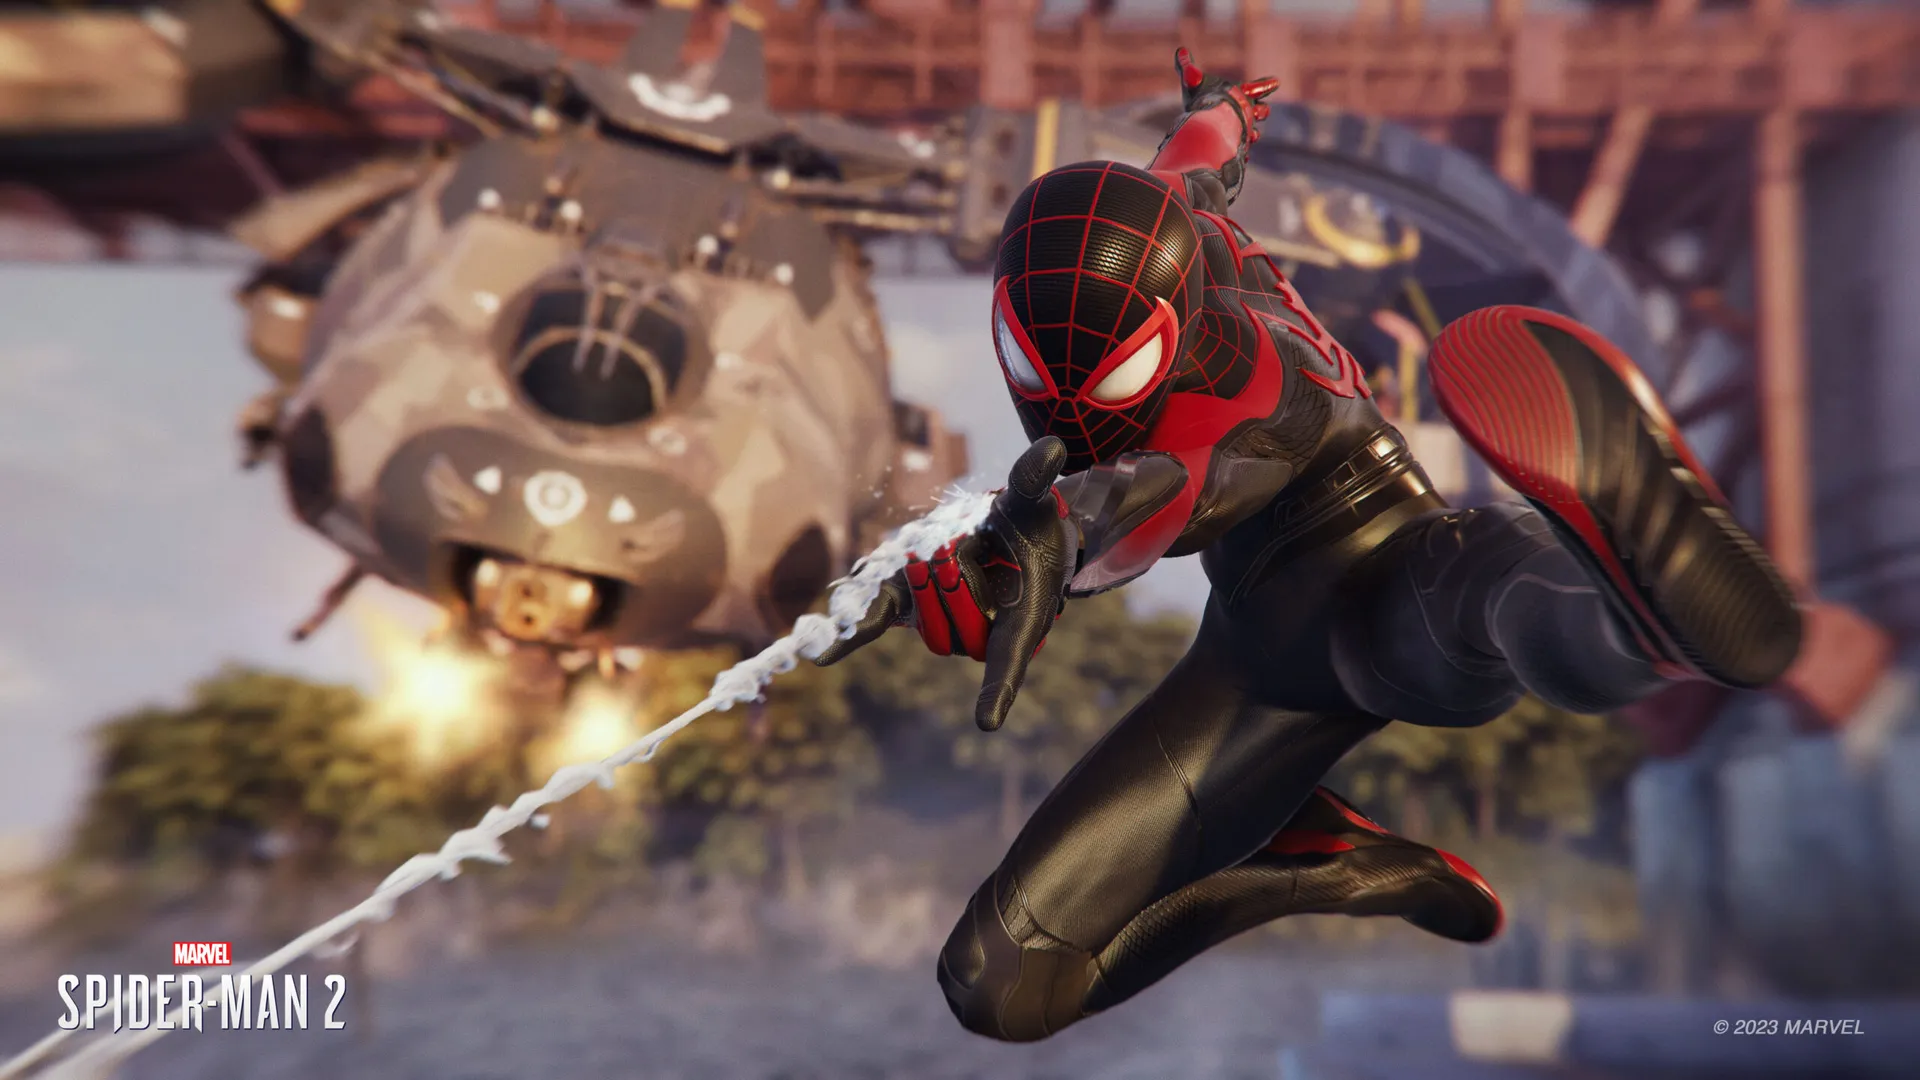 Marvel's Spider-Man 2: Just Let Go Trophy Achievement Walkthrough 